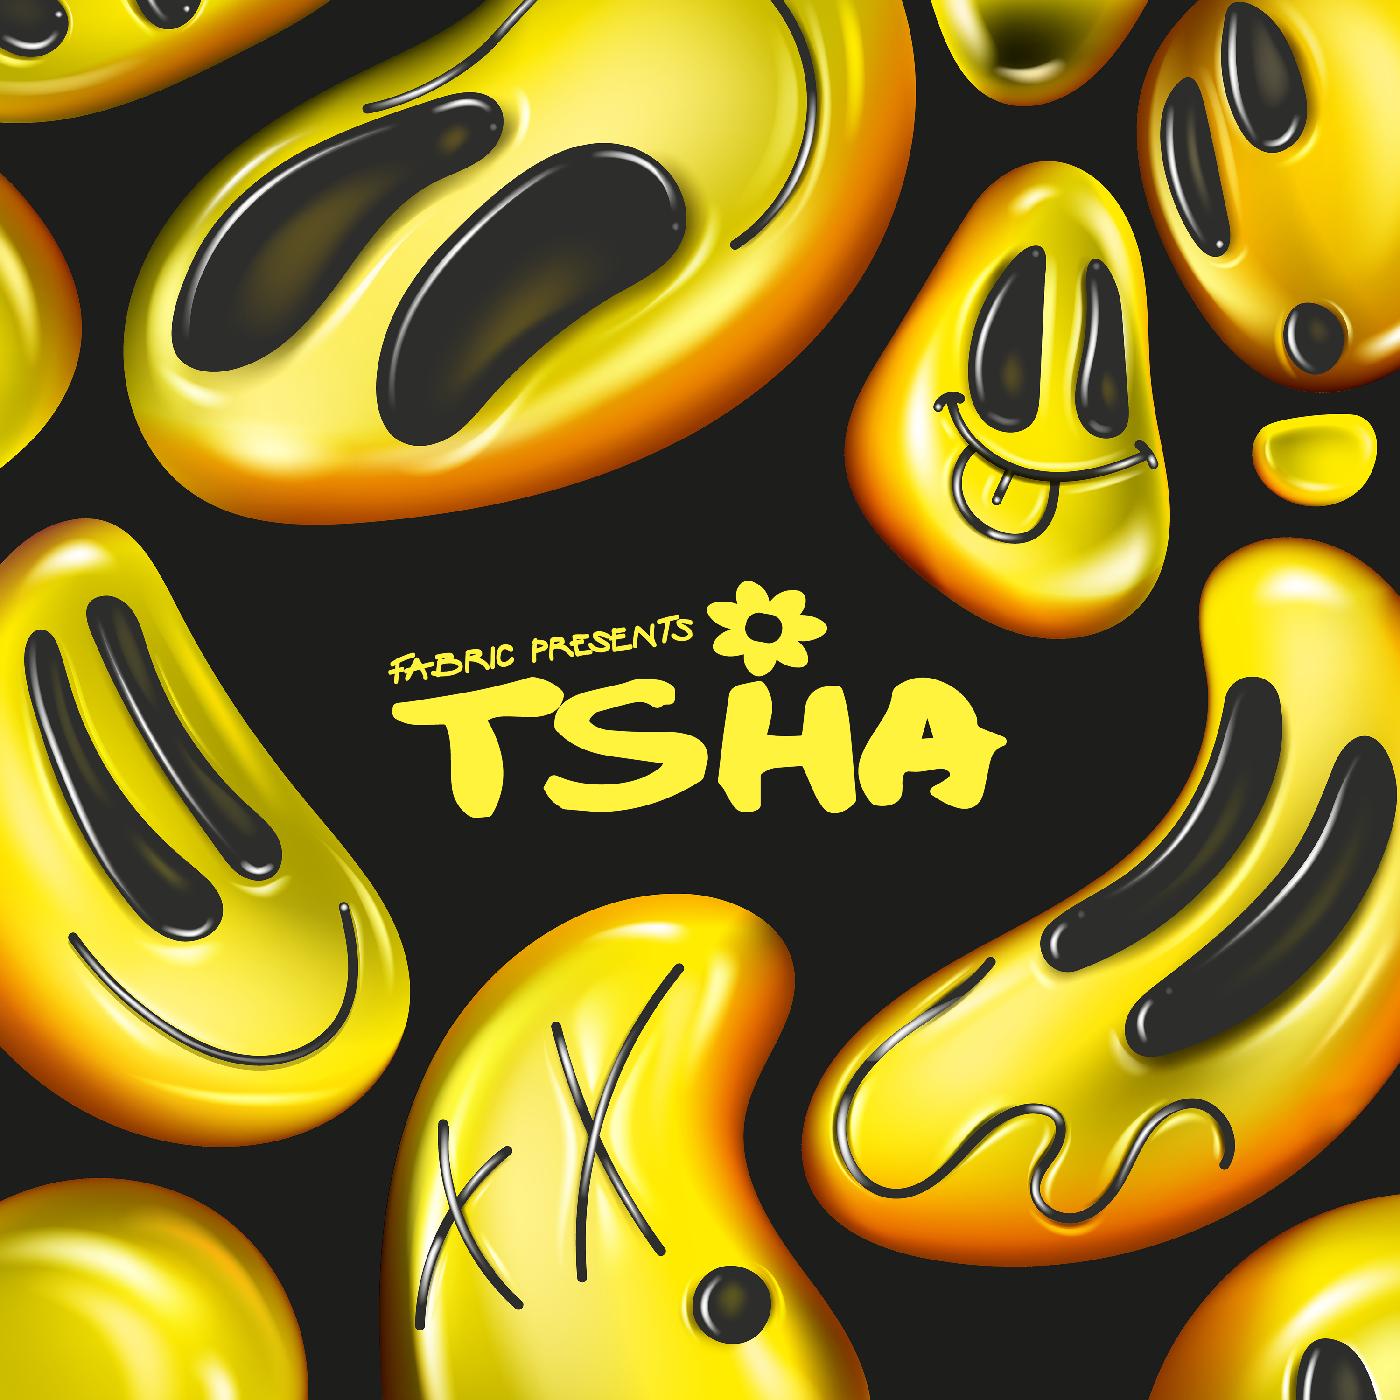 TSHA | fabric presents TSHA | CD